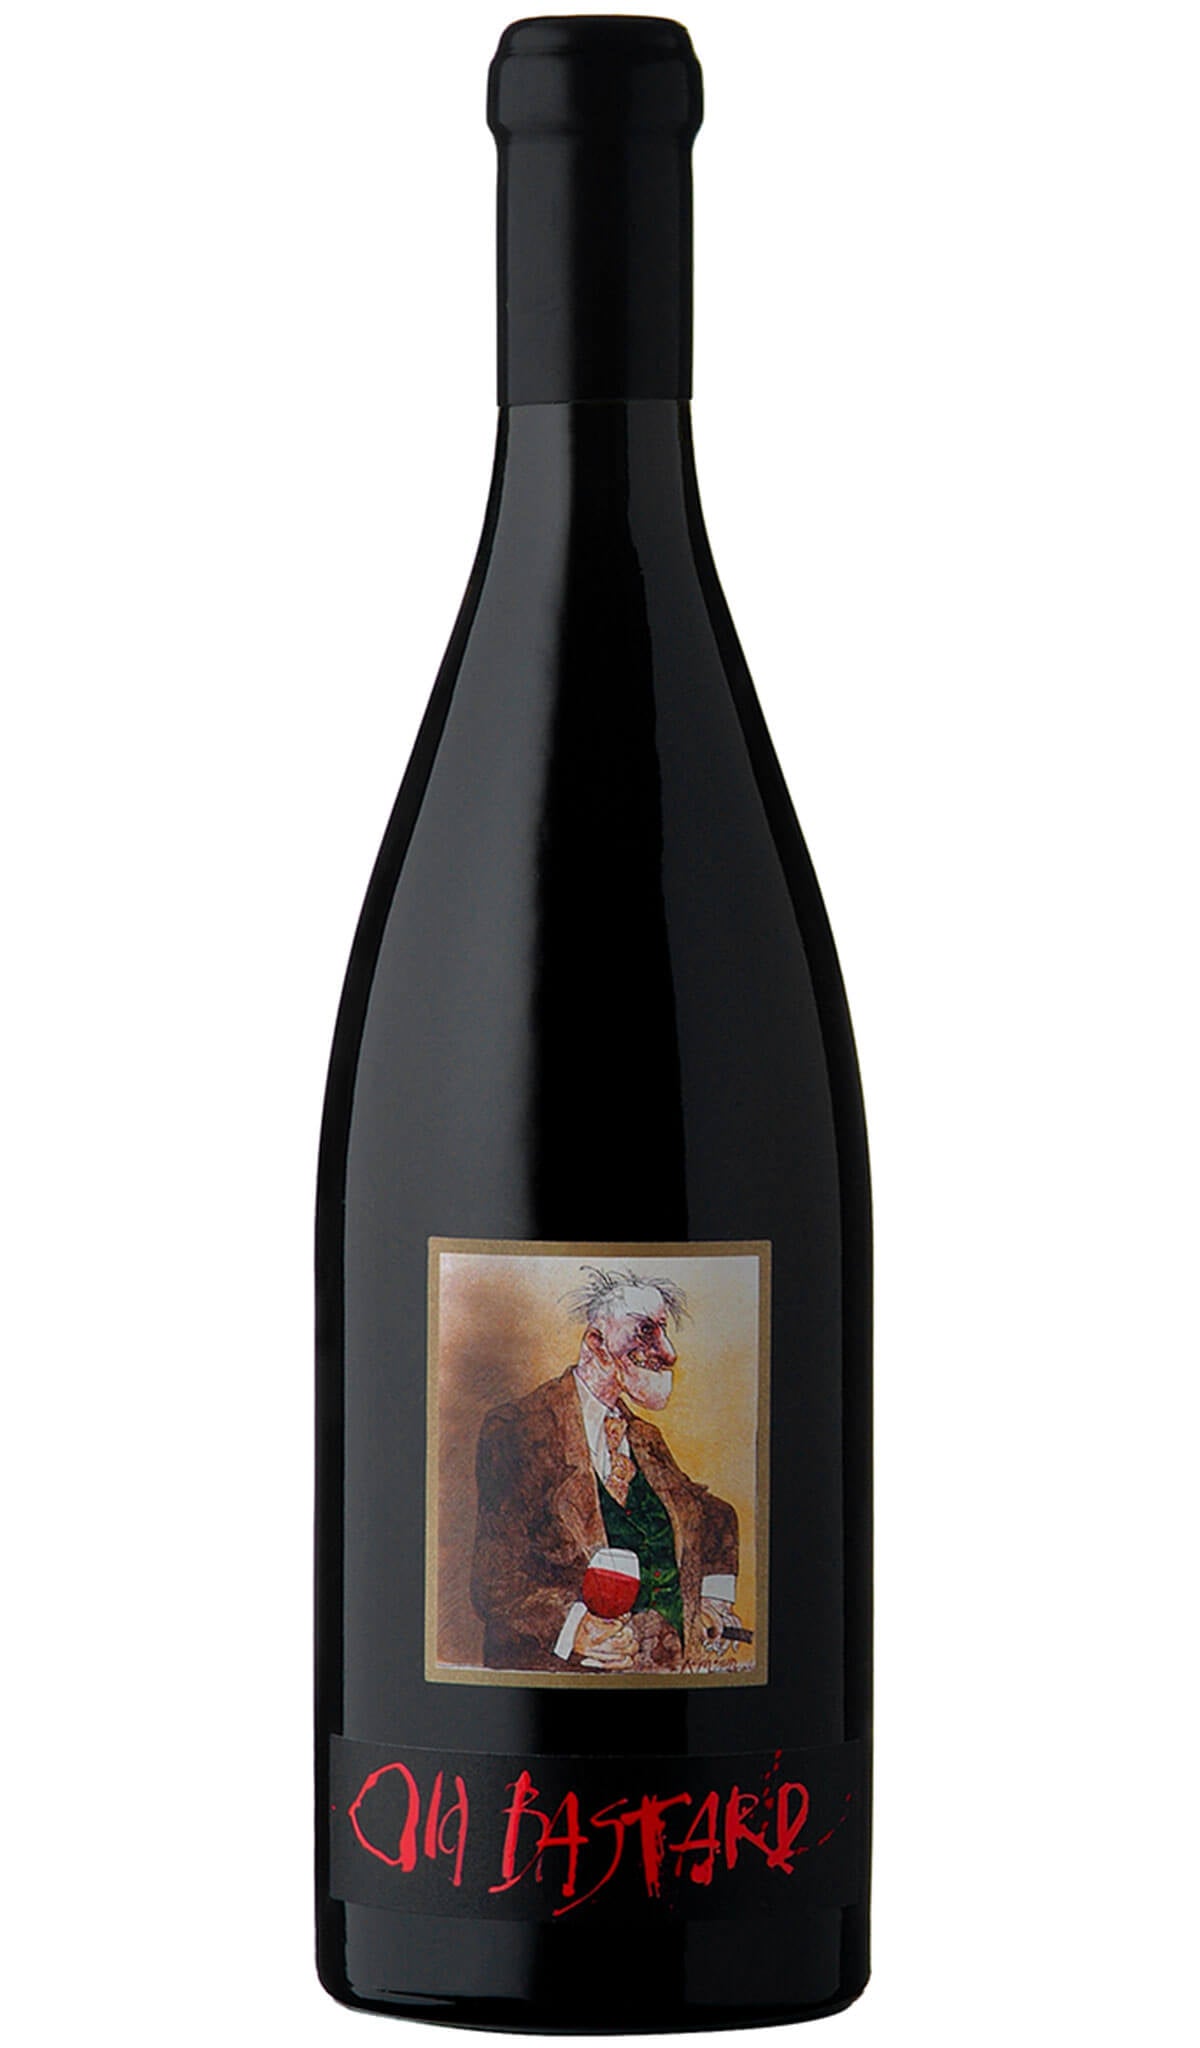 Find out more or buy Kaesler Old Bastard Shiraz 2019 (Barossa) online at Wine Sellers Direct - Australia’s independent liquor specialists.